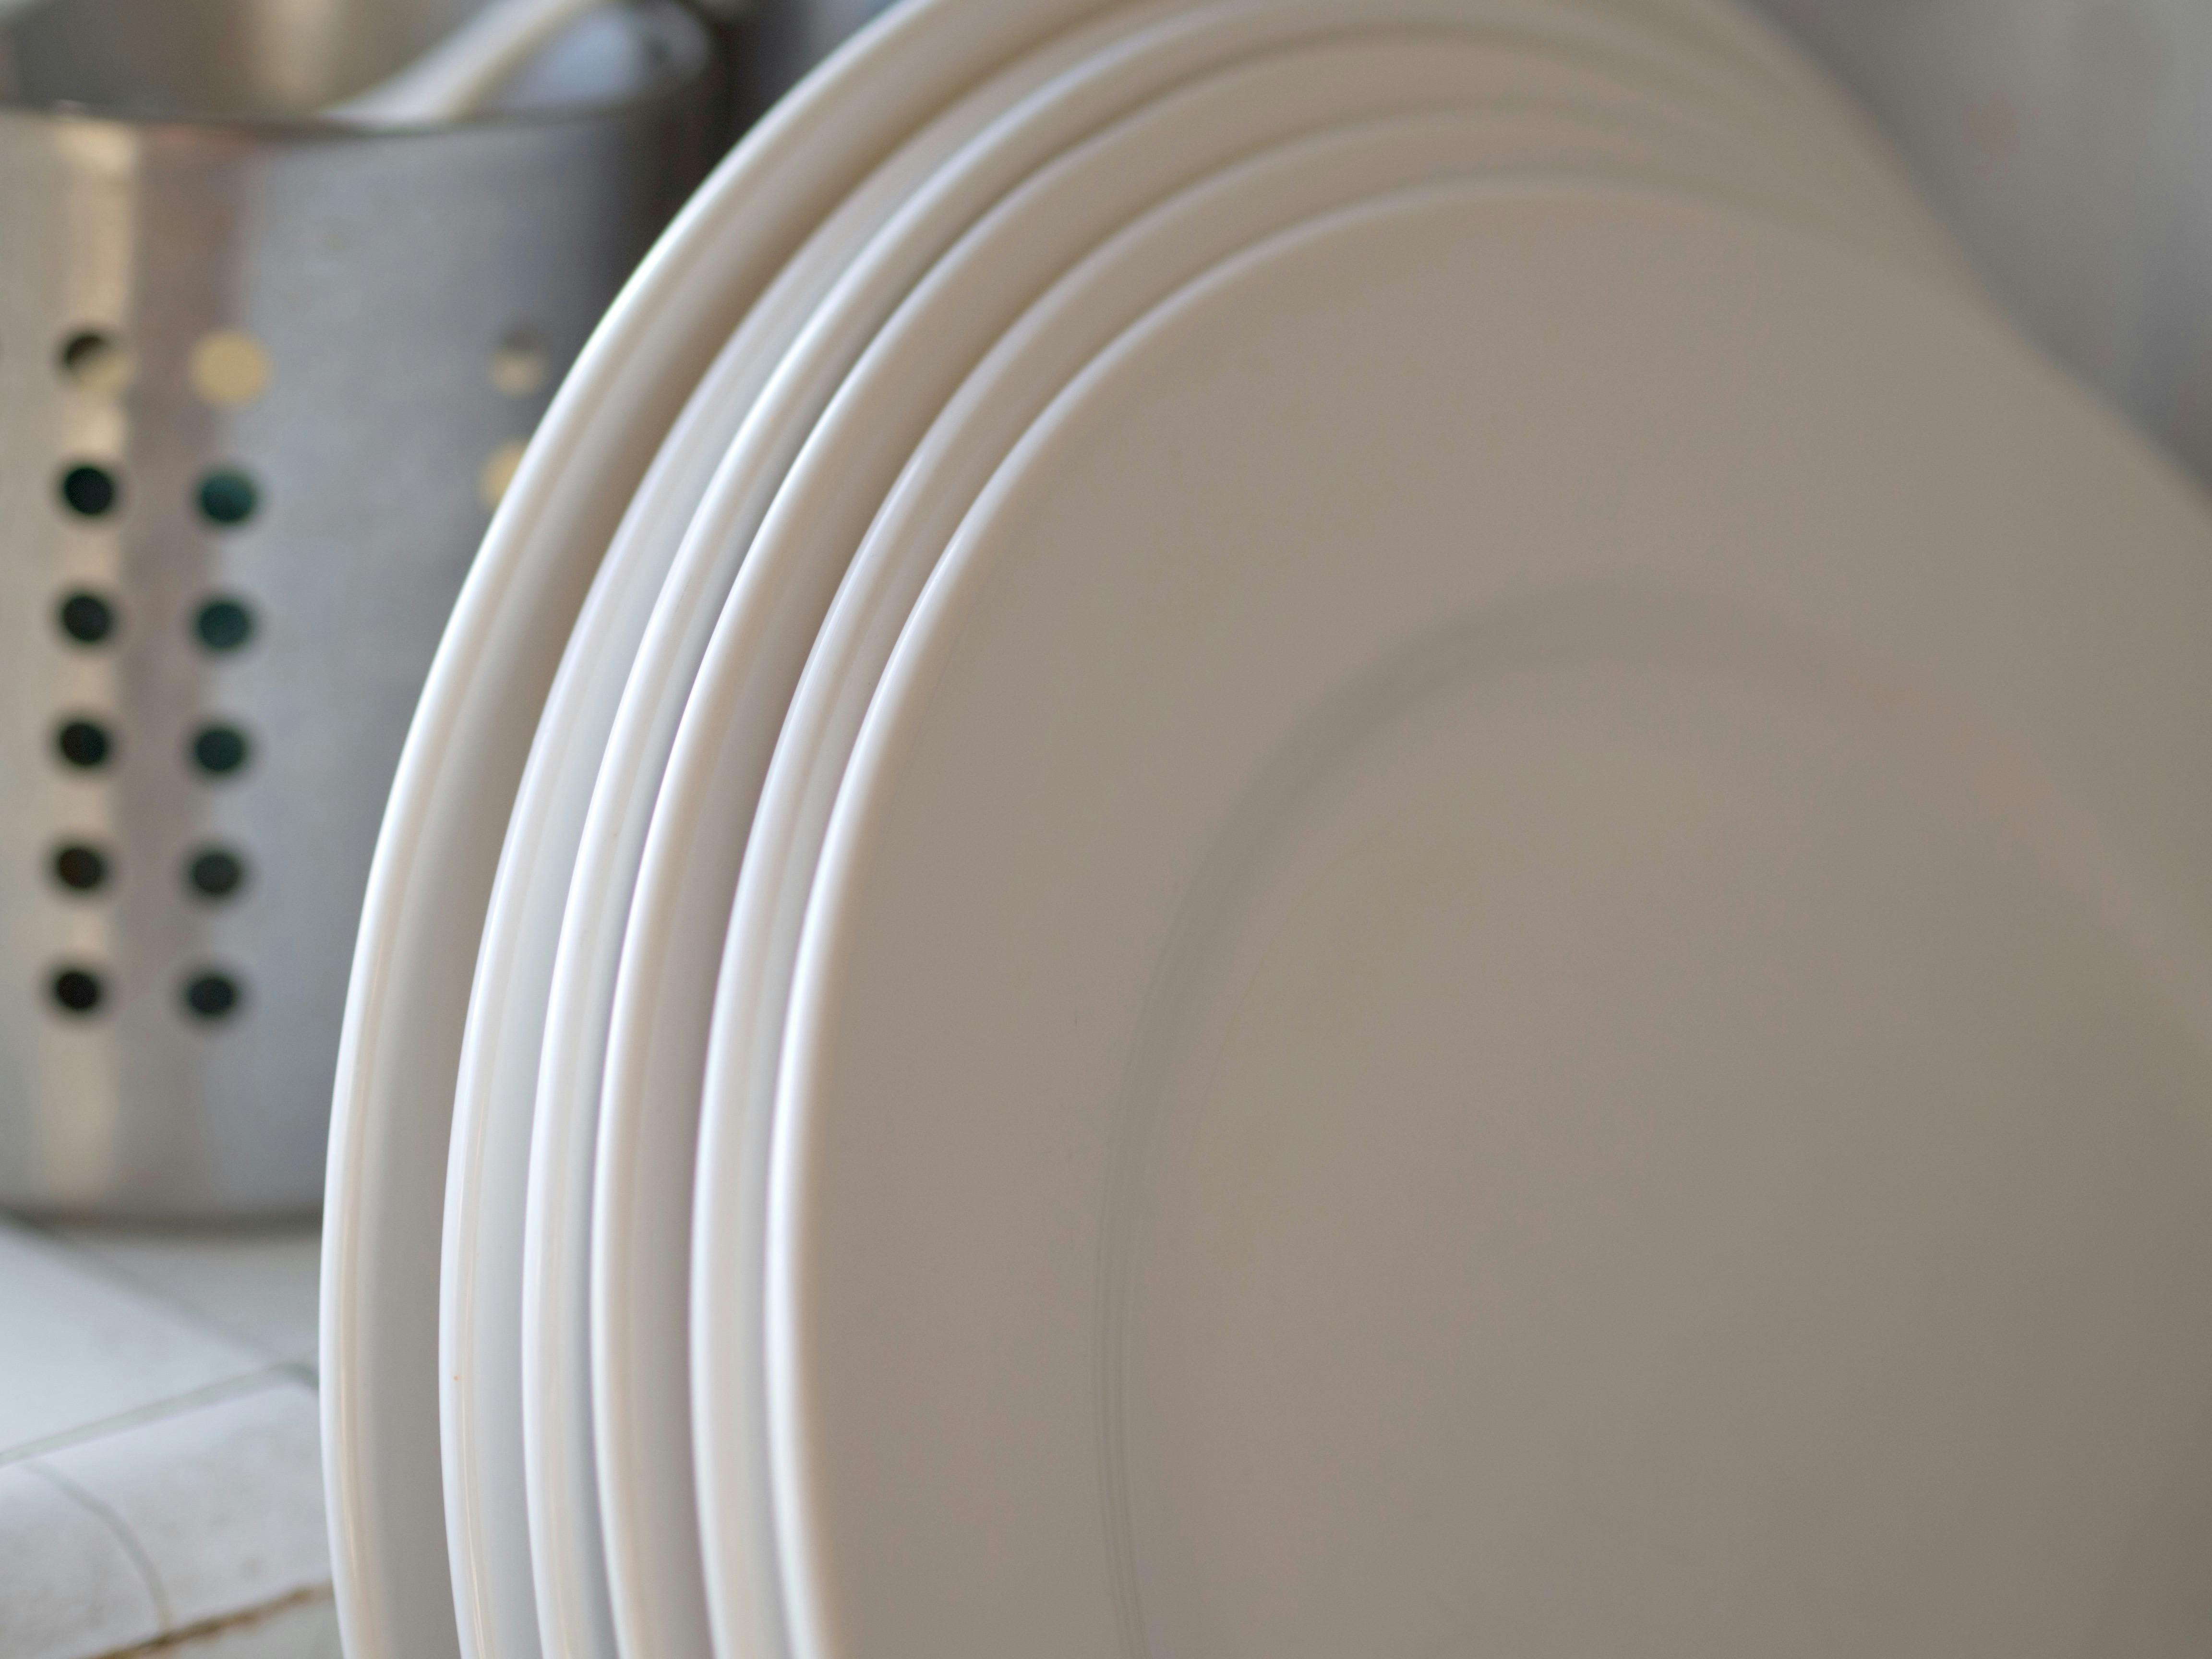 Free stock photo of dining plates, plates, washing up